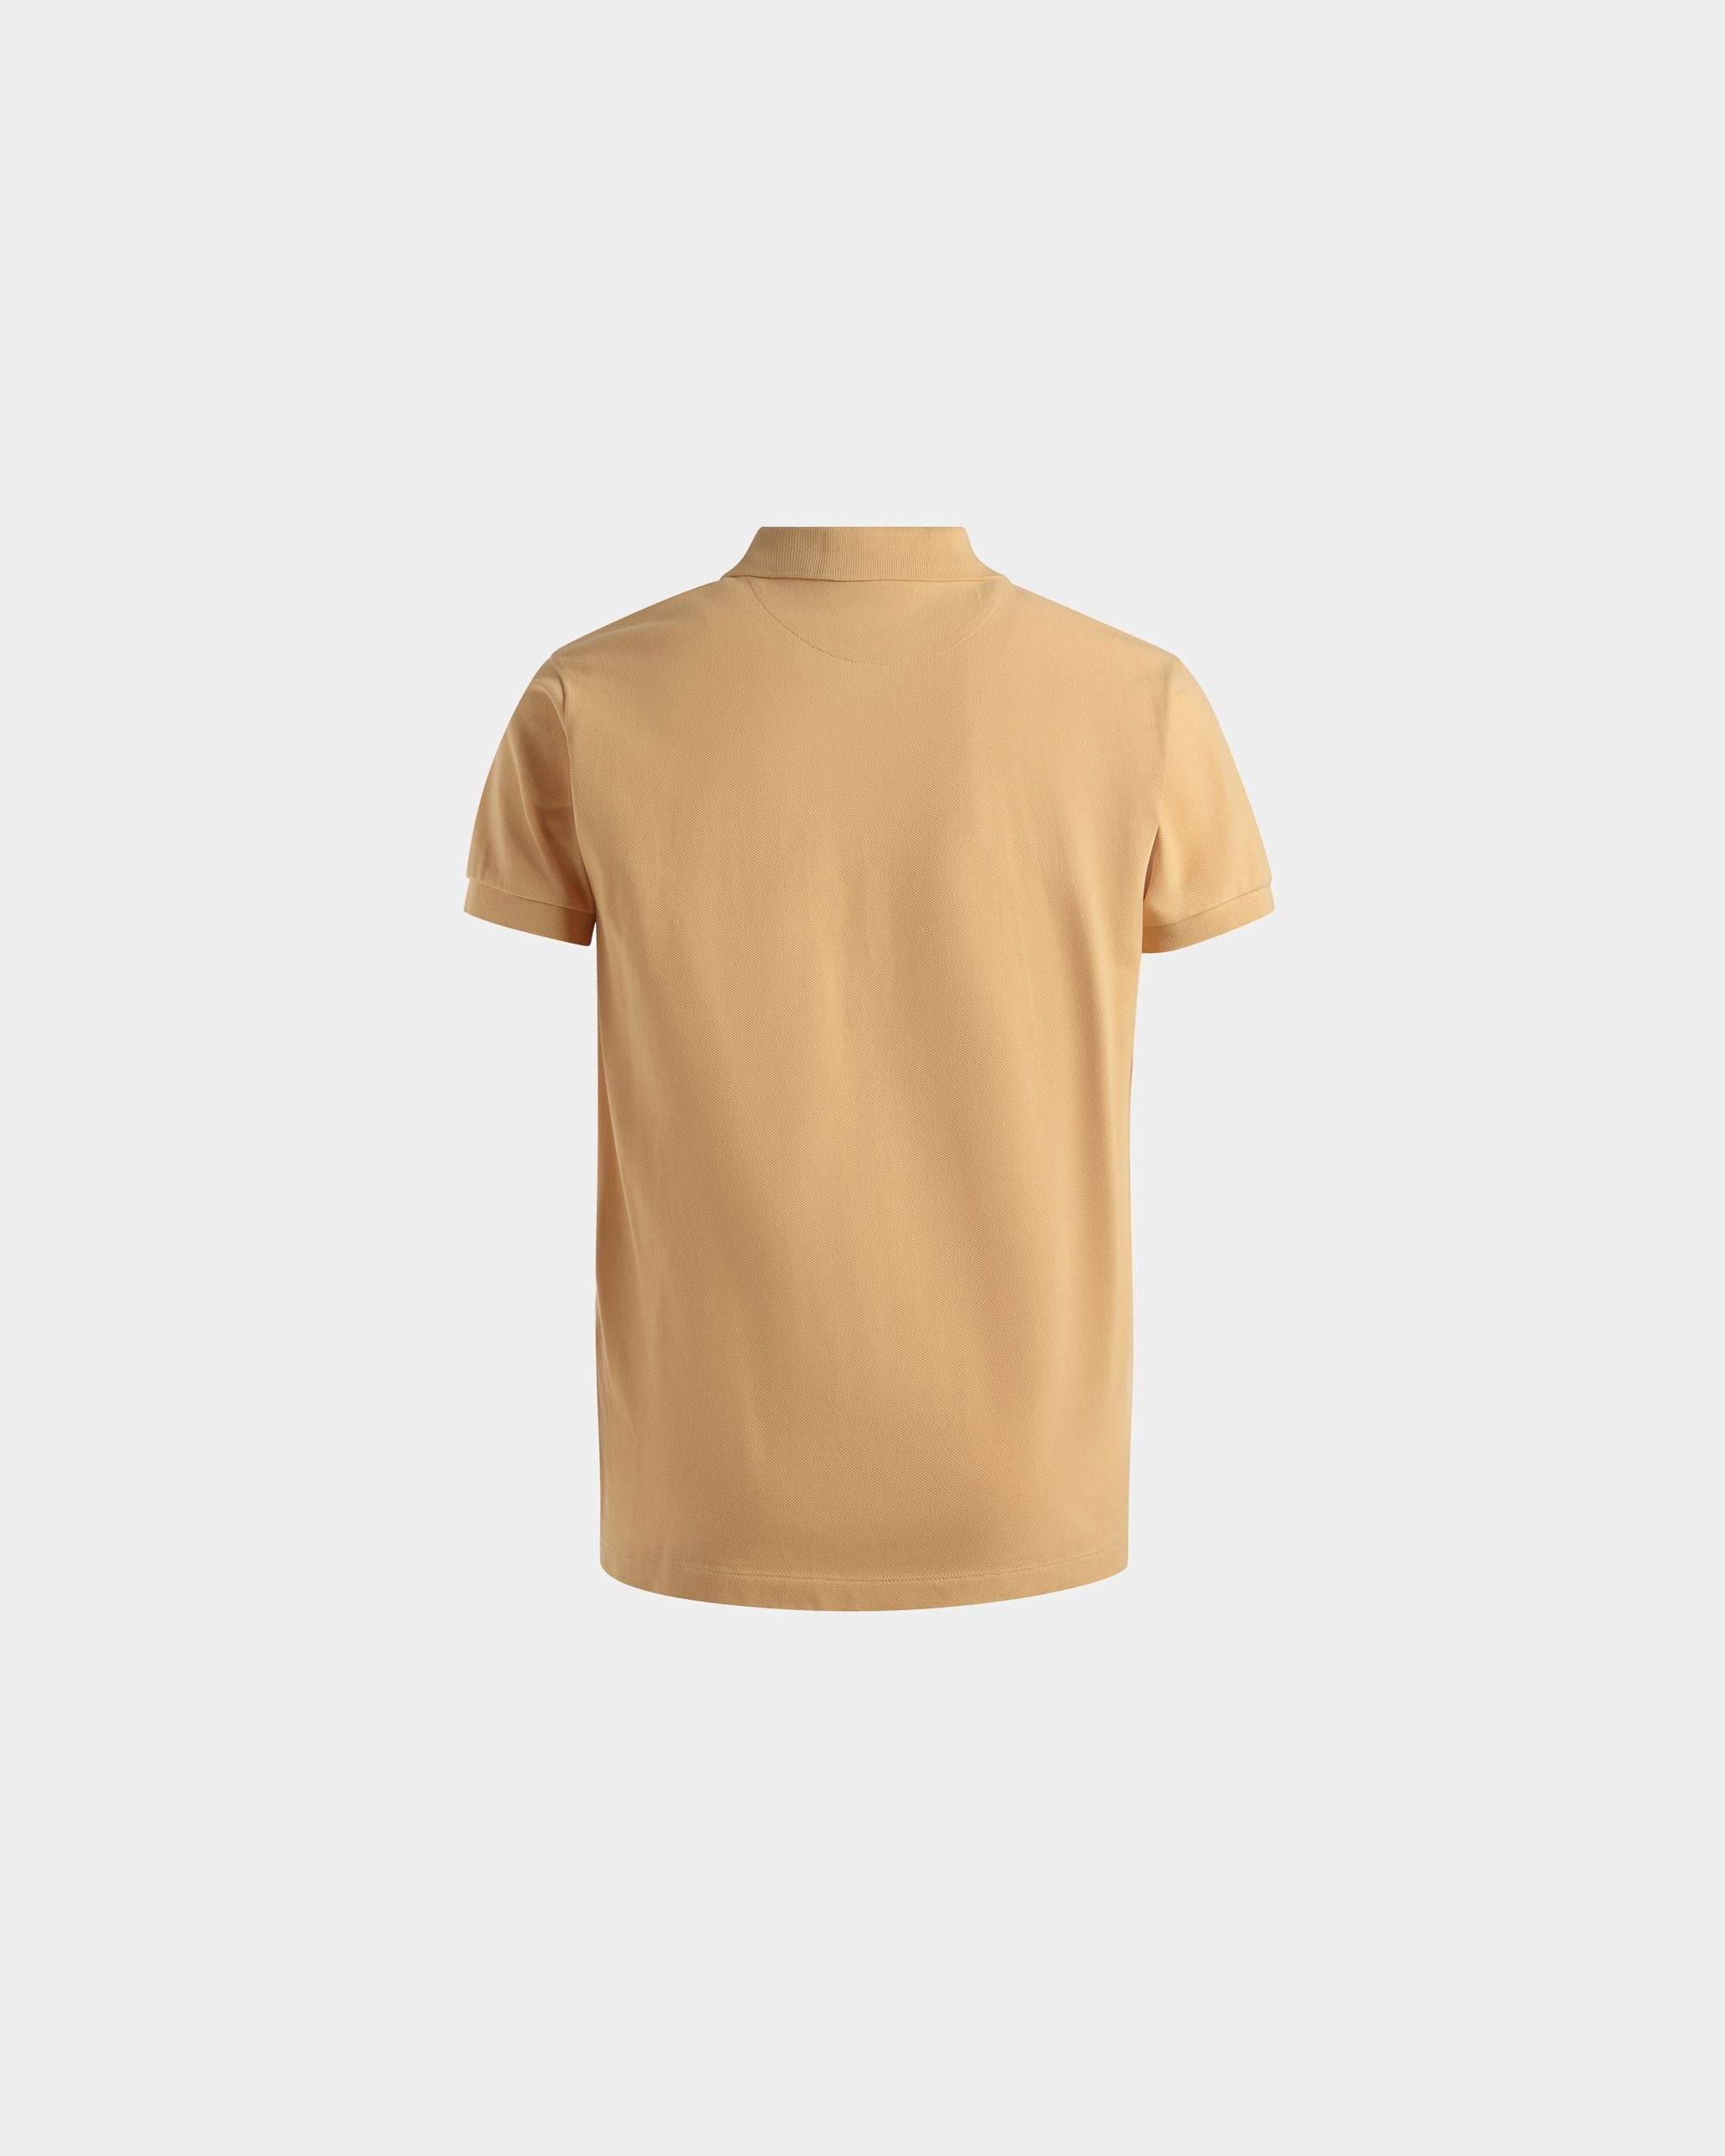 Emblem Poloshirt | Poloshirt für Herren | Cremefarbene Baumwolle | Bally | Still Life Rückseite